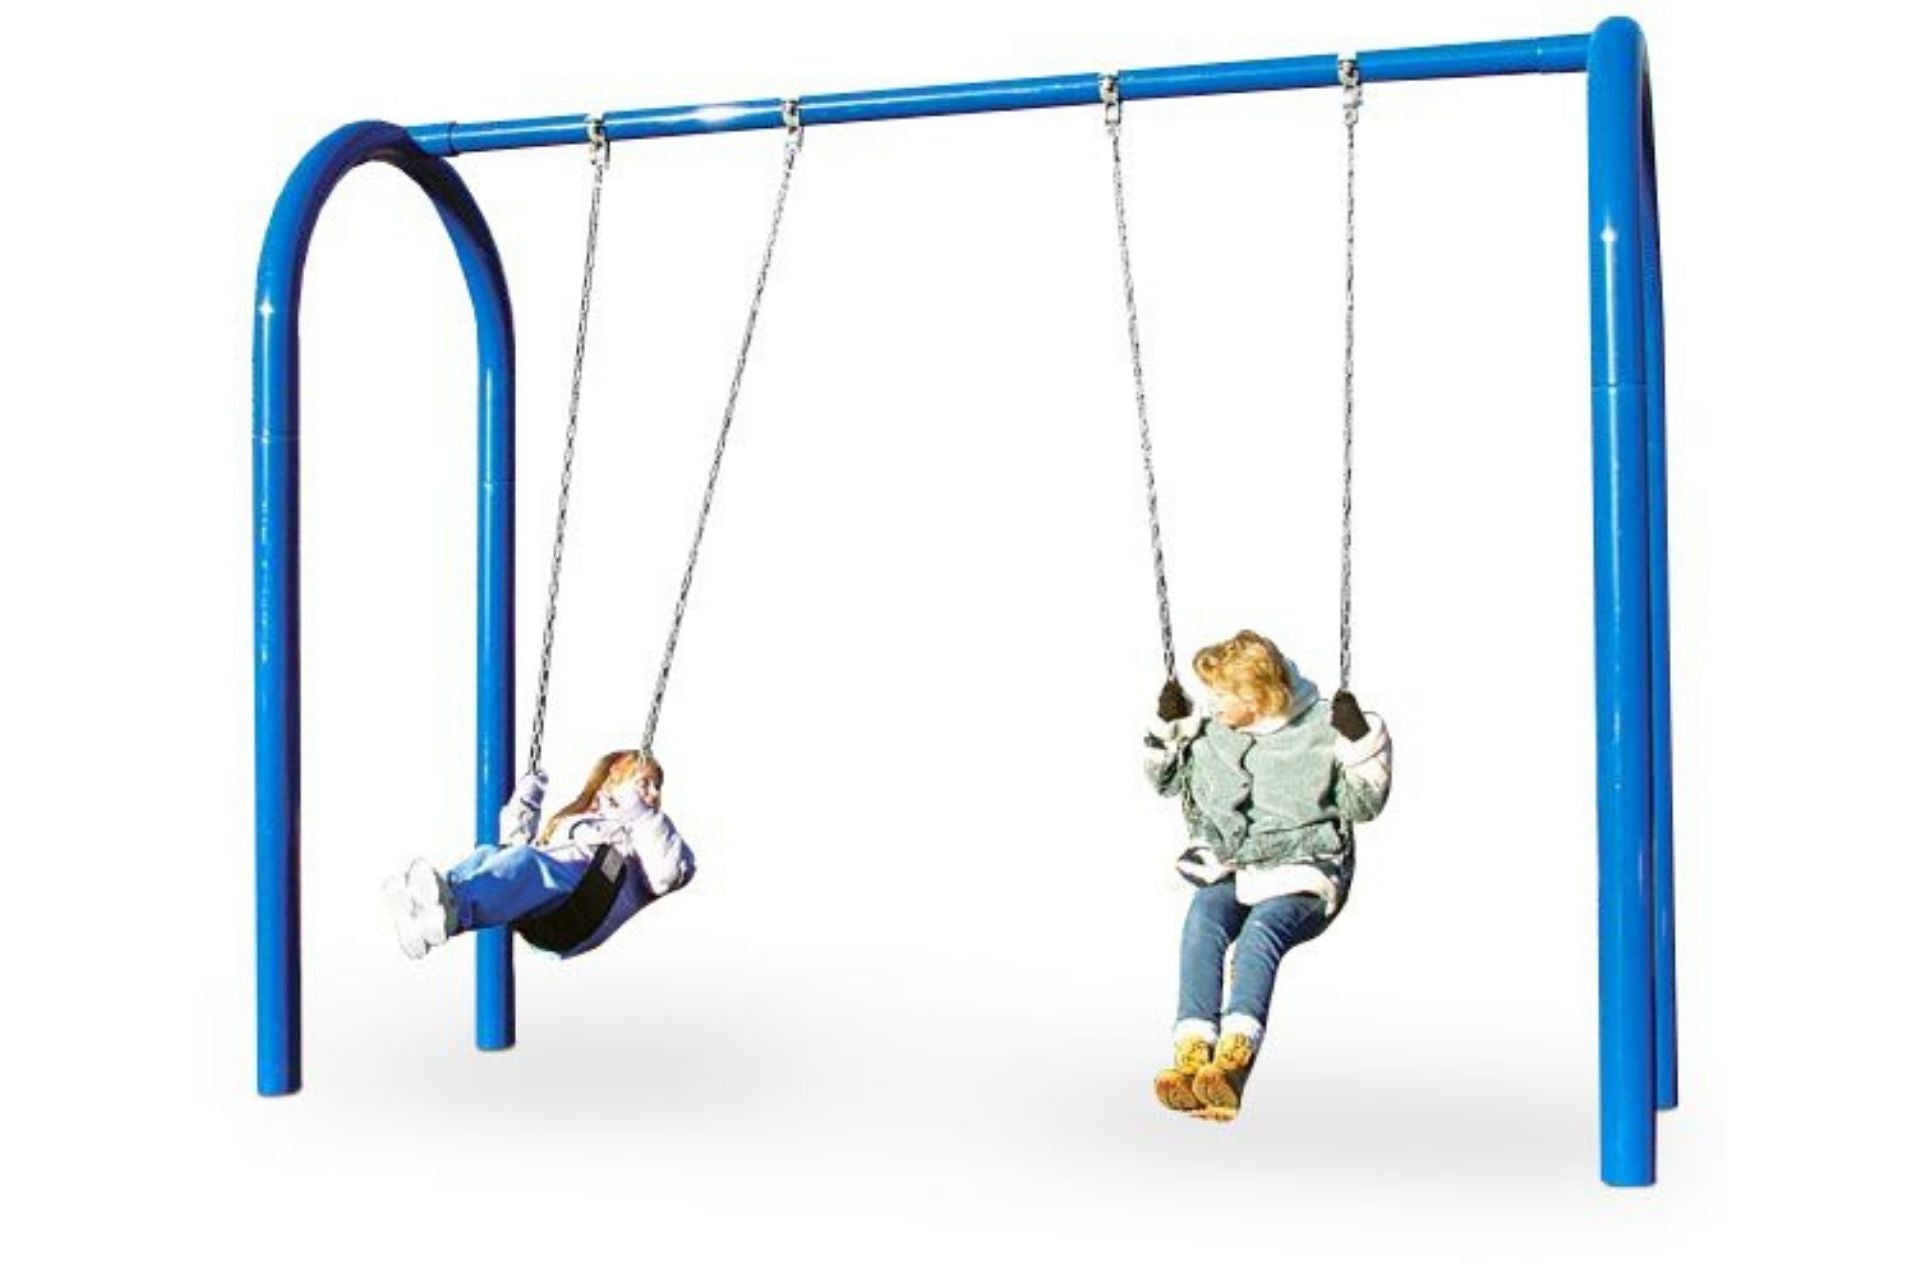 Single Post Swing Set - The 4 Kids